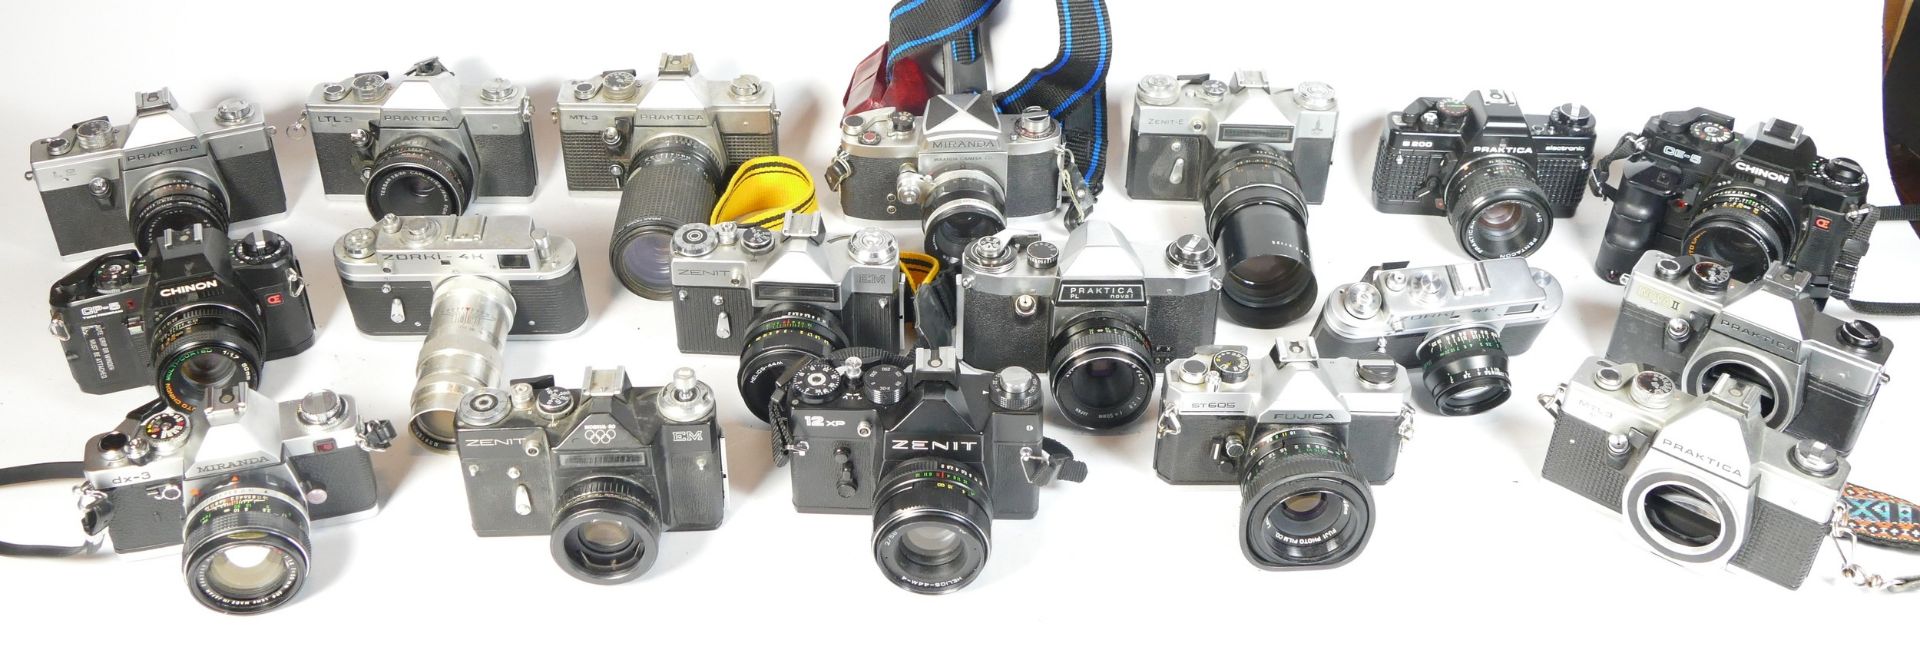 Nineteen SLR vintage film cameras to include a Zenit 12xp, a Chinon CE-5, a Praktica Nova II and a